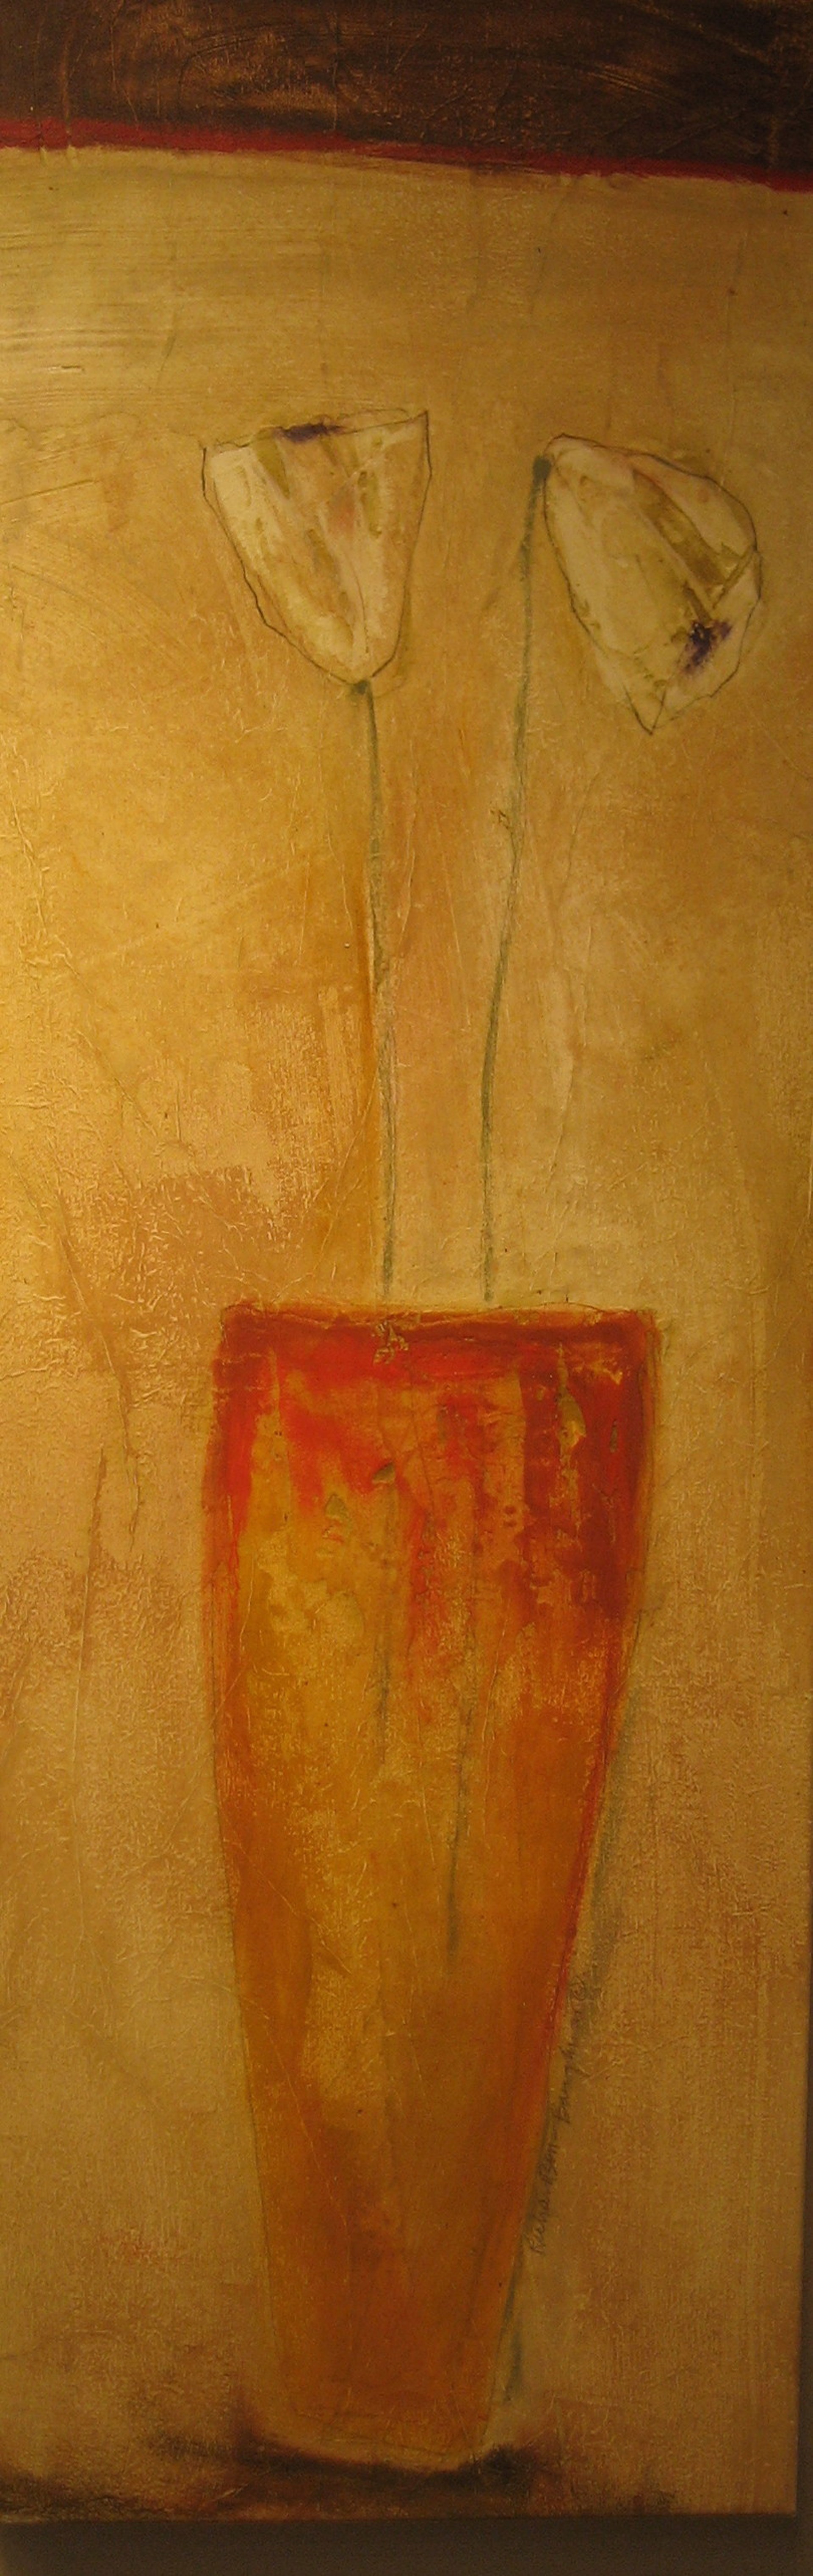 30663 Tulip Still Life JRB00012 by Janet Richardson-Baughman